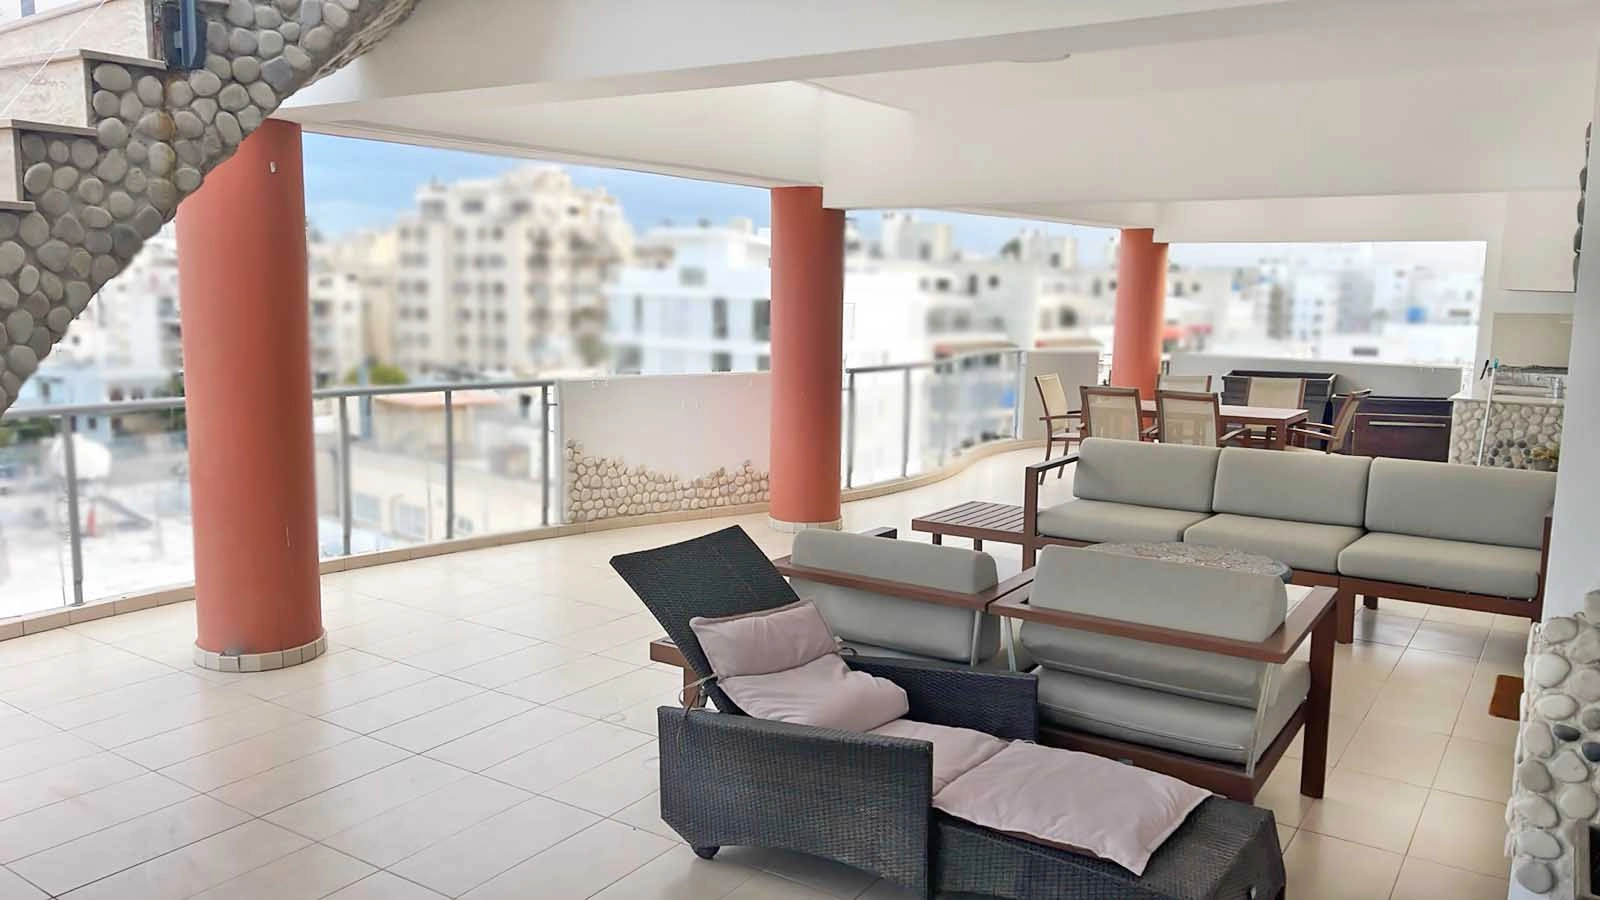 4 Bedroom Apartment for Sale in Nicosia